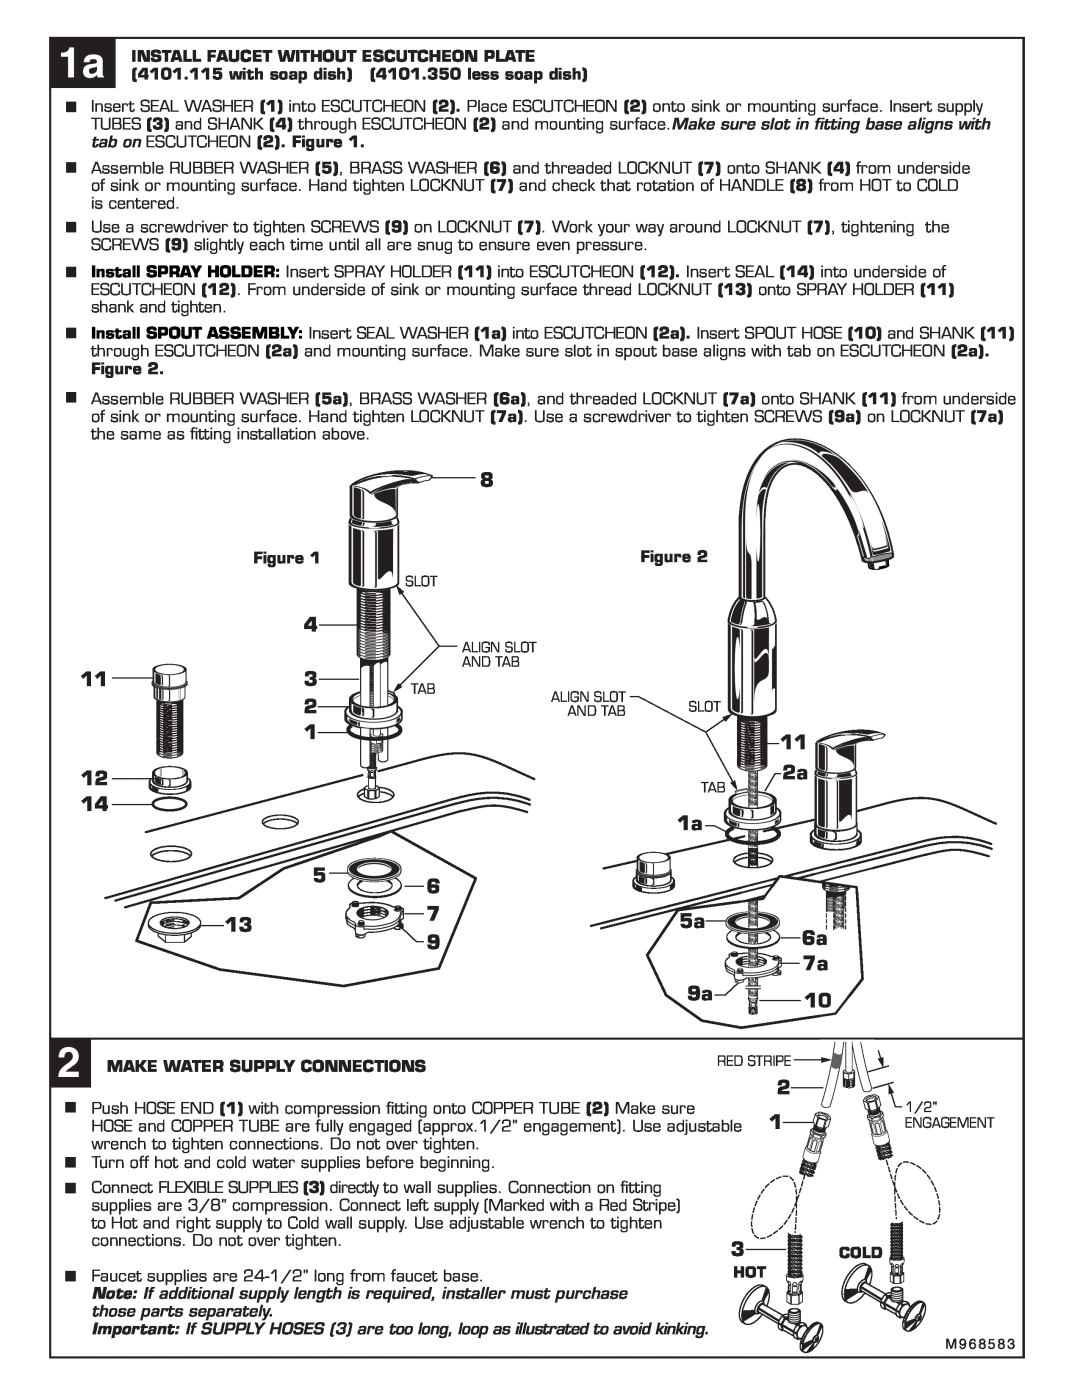 American Standard 4101.301 installation instructions 